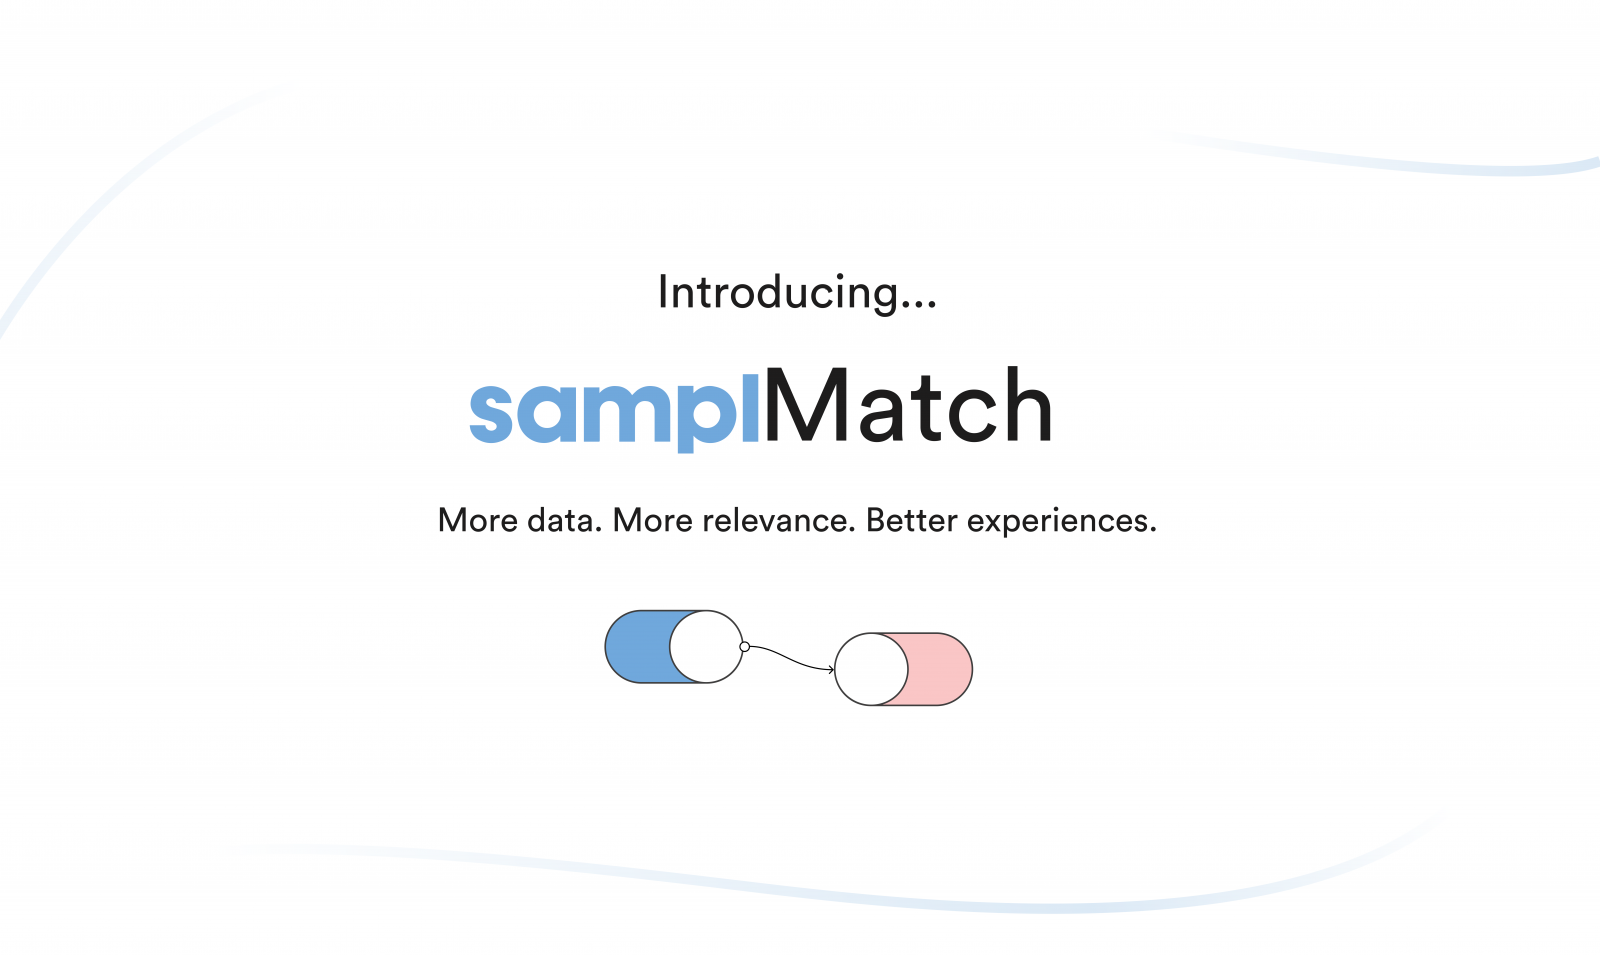 IntroducingSamplMatch